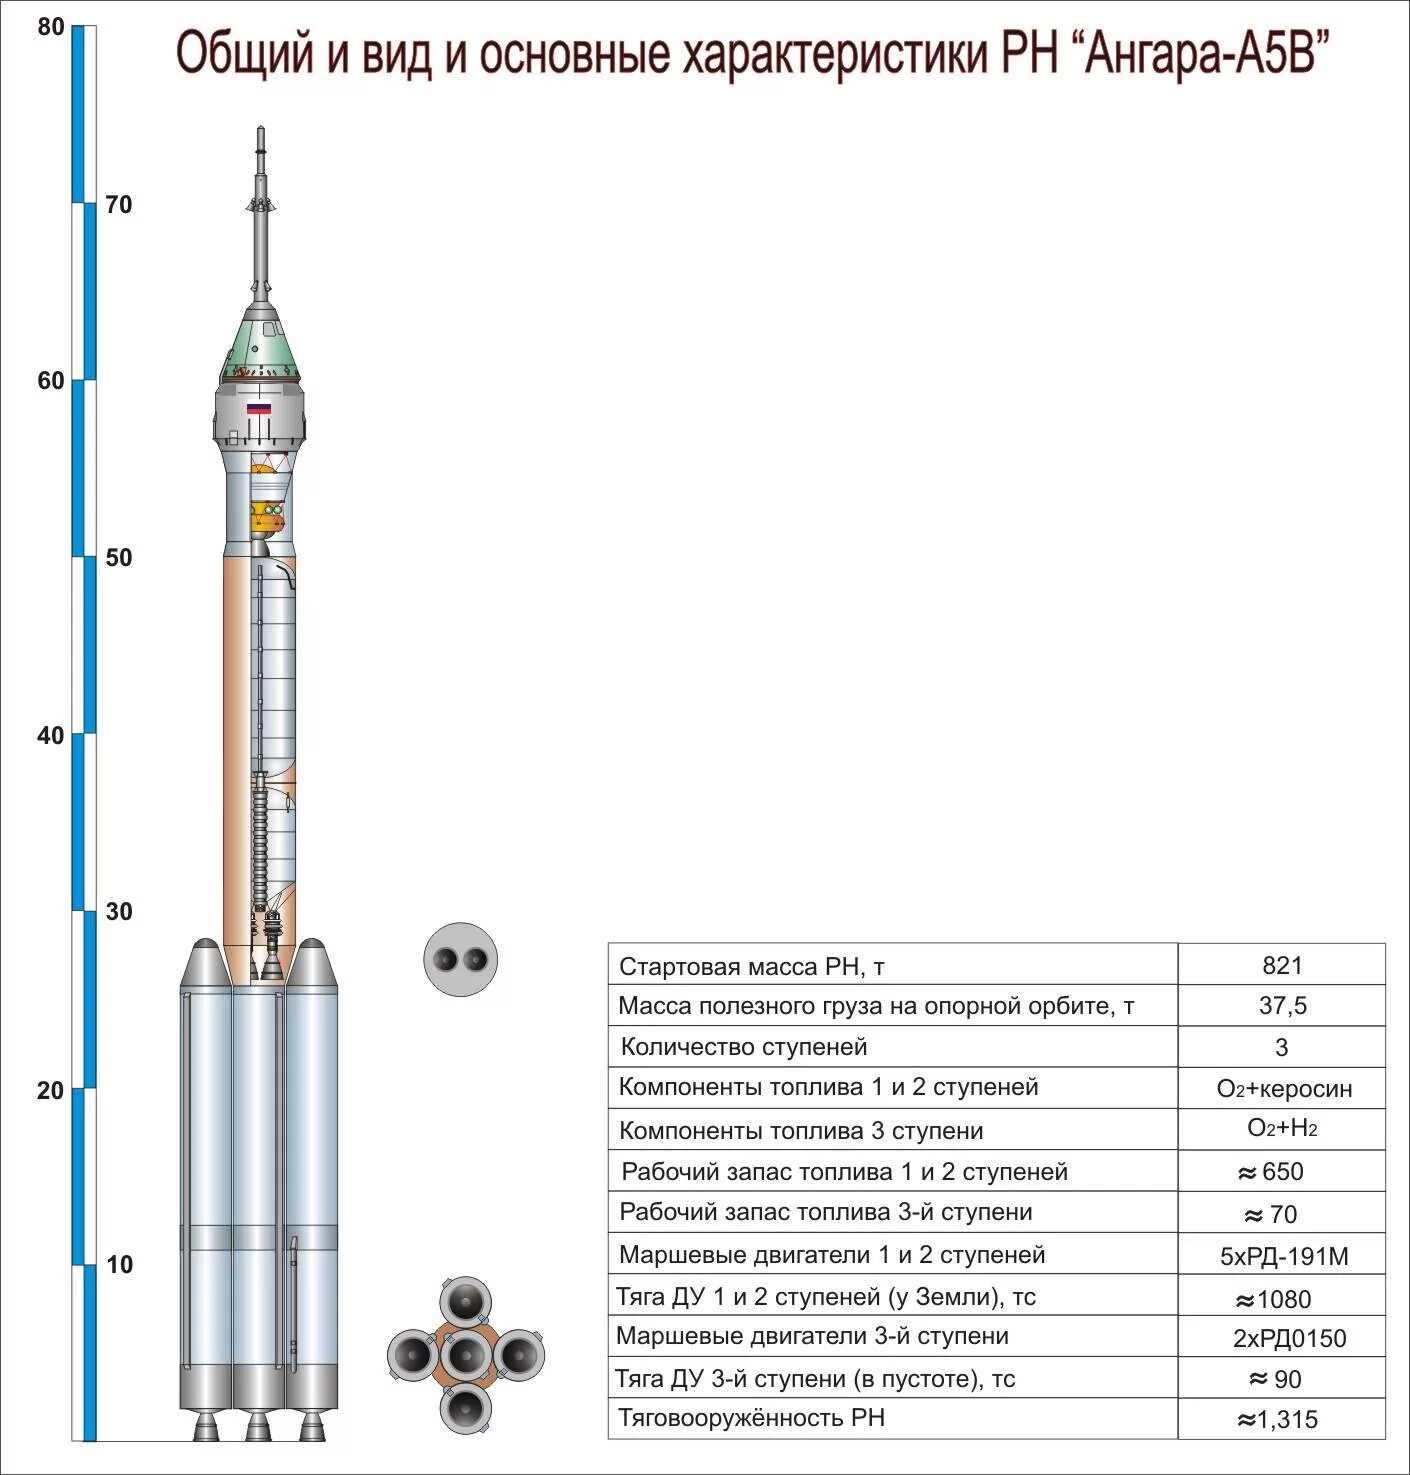 Ракета-носитель "Ангара-а5". Ангара 1.2 ракета-носитель чертеж. Ракета-носитель Ангара чертеж. Ракета носитель Ангара а5 чертеж.